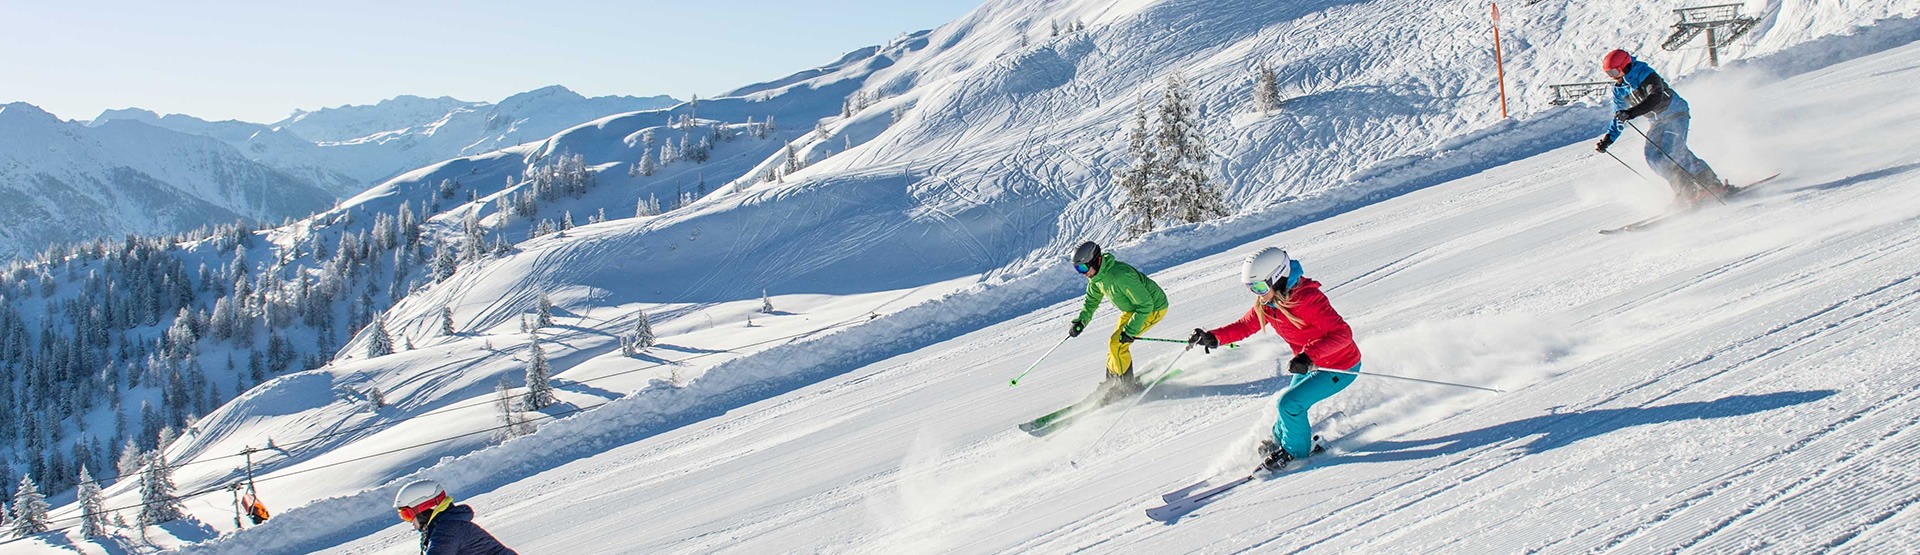 Skiurlauf in Flachau - Skifahren im Snow Space Salzburg